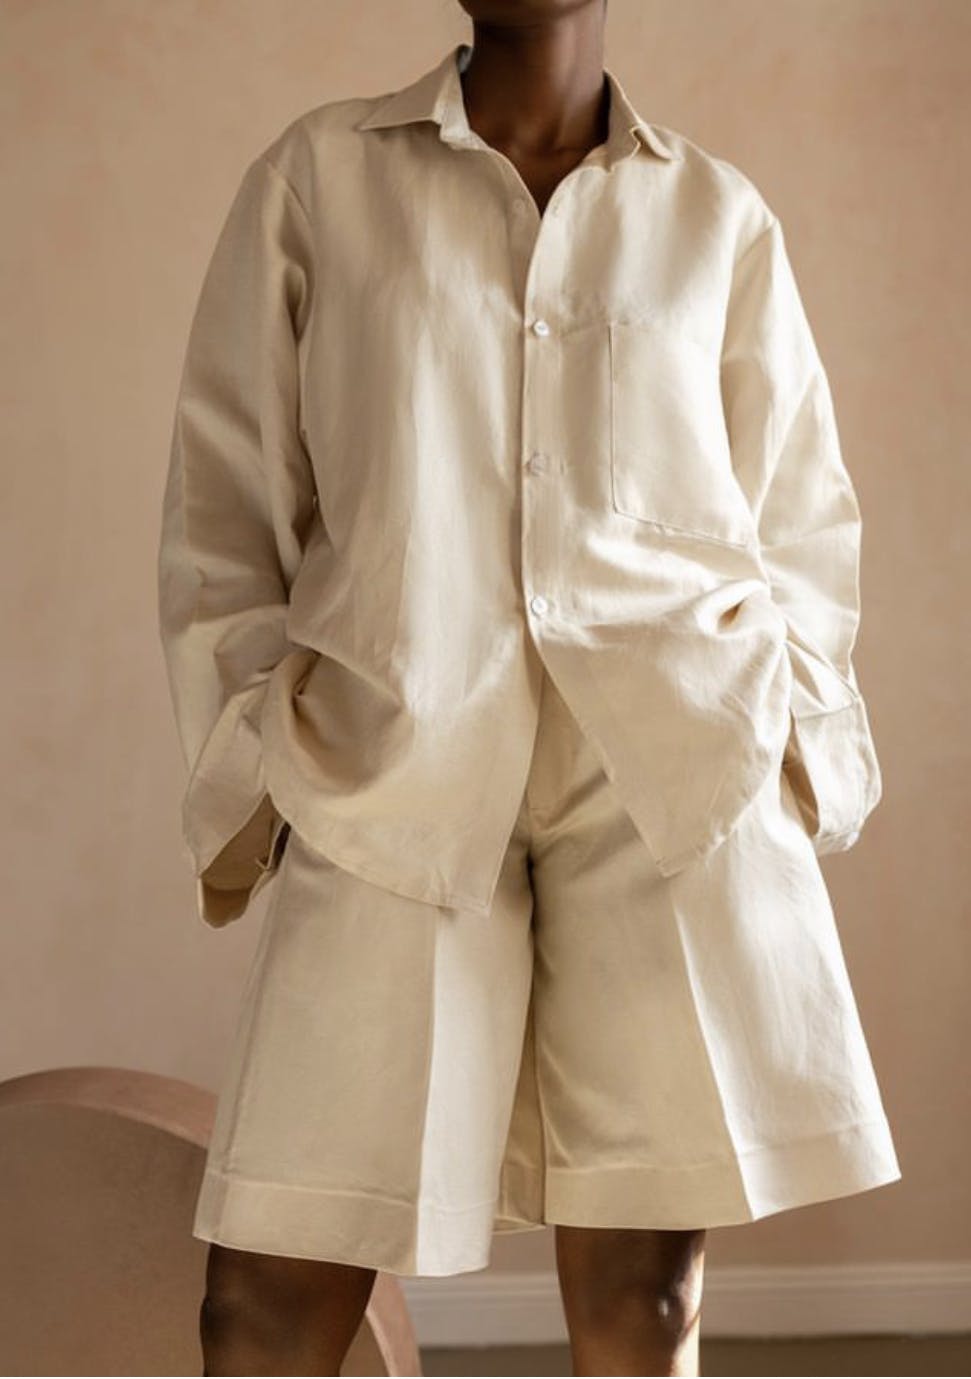 Linen Set - Short, a product by Knanfe Fashion